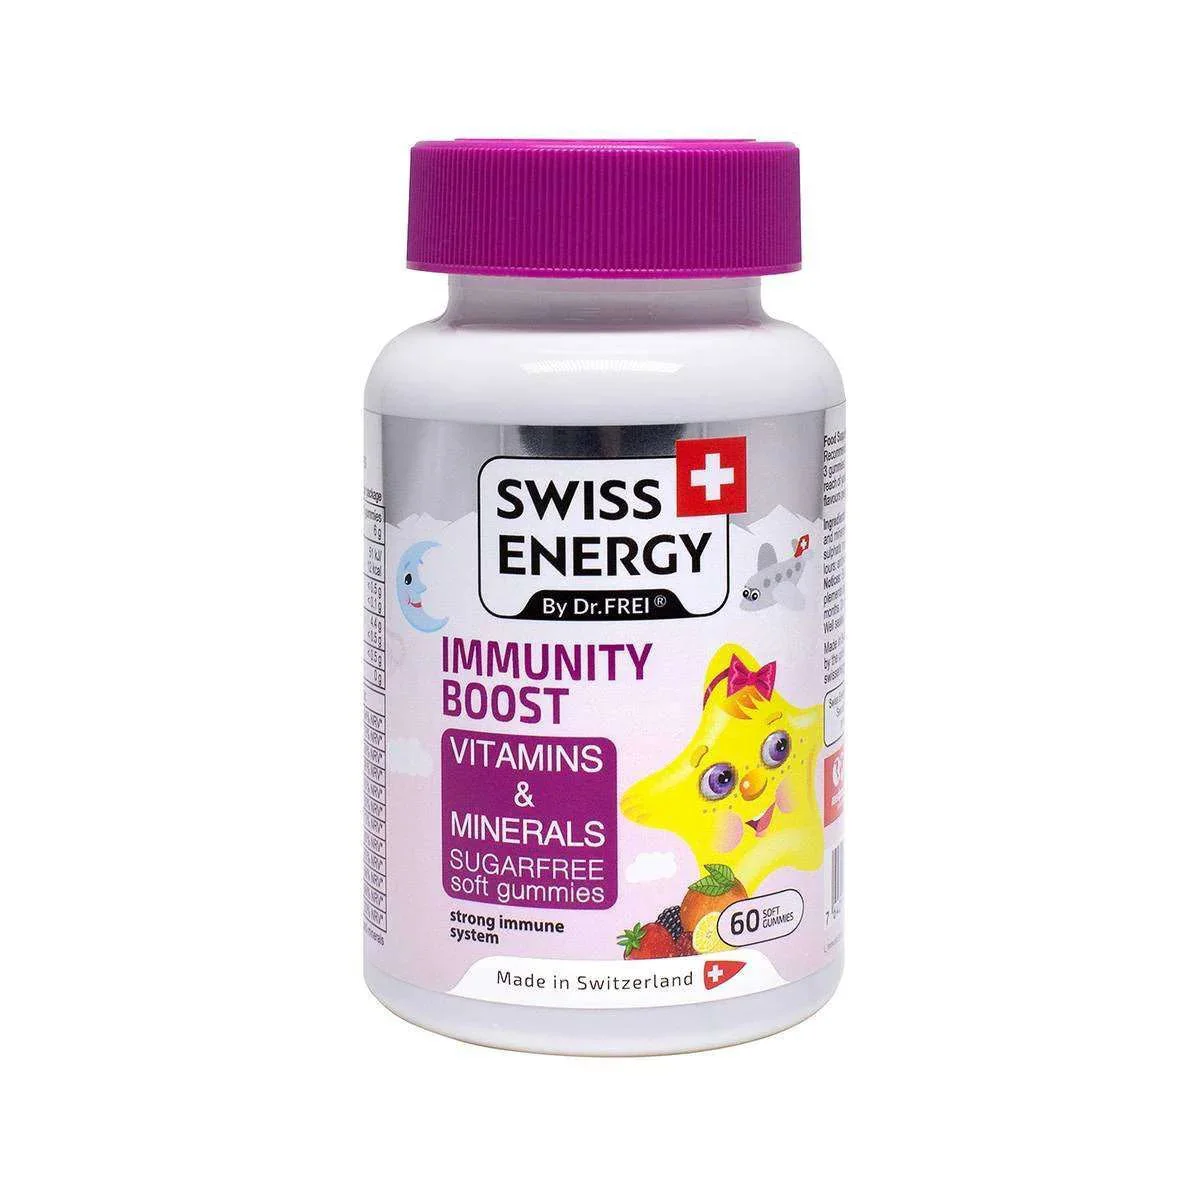 Jeleuri gumate Swiss Energy Immunity Boost, 60 buc.